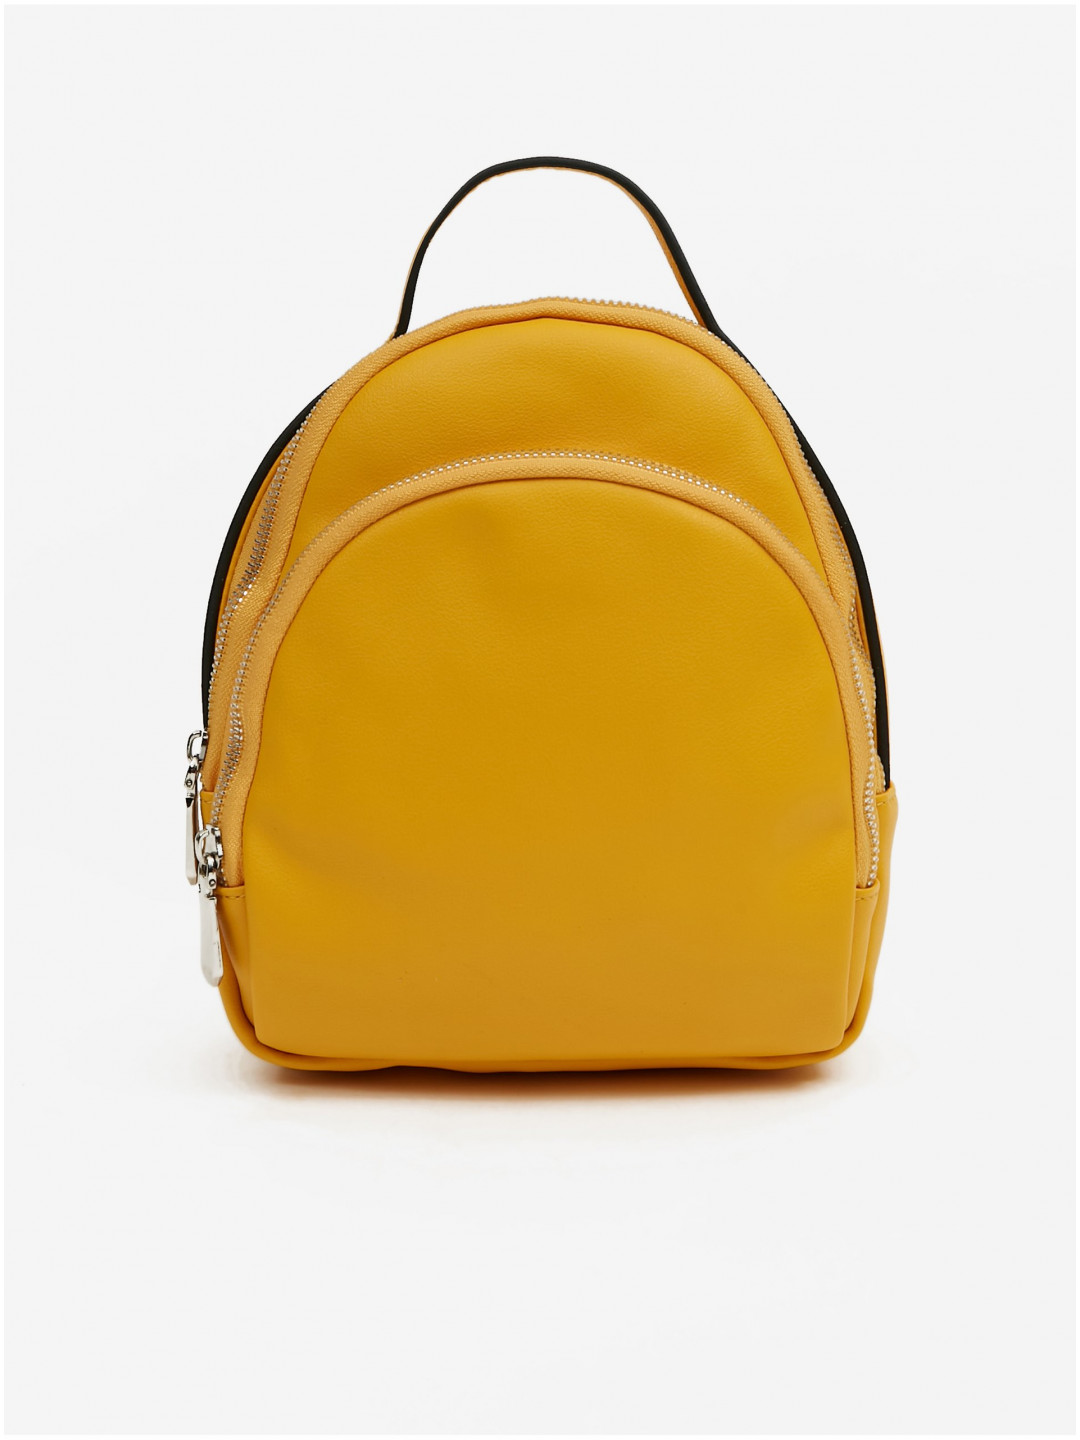 Žlutý dámský batoh ORSAY